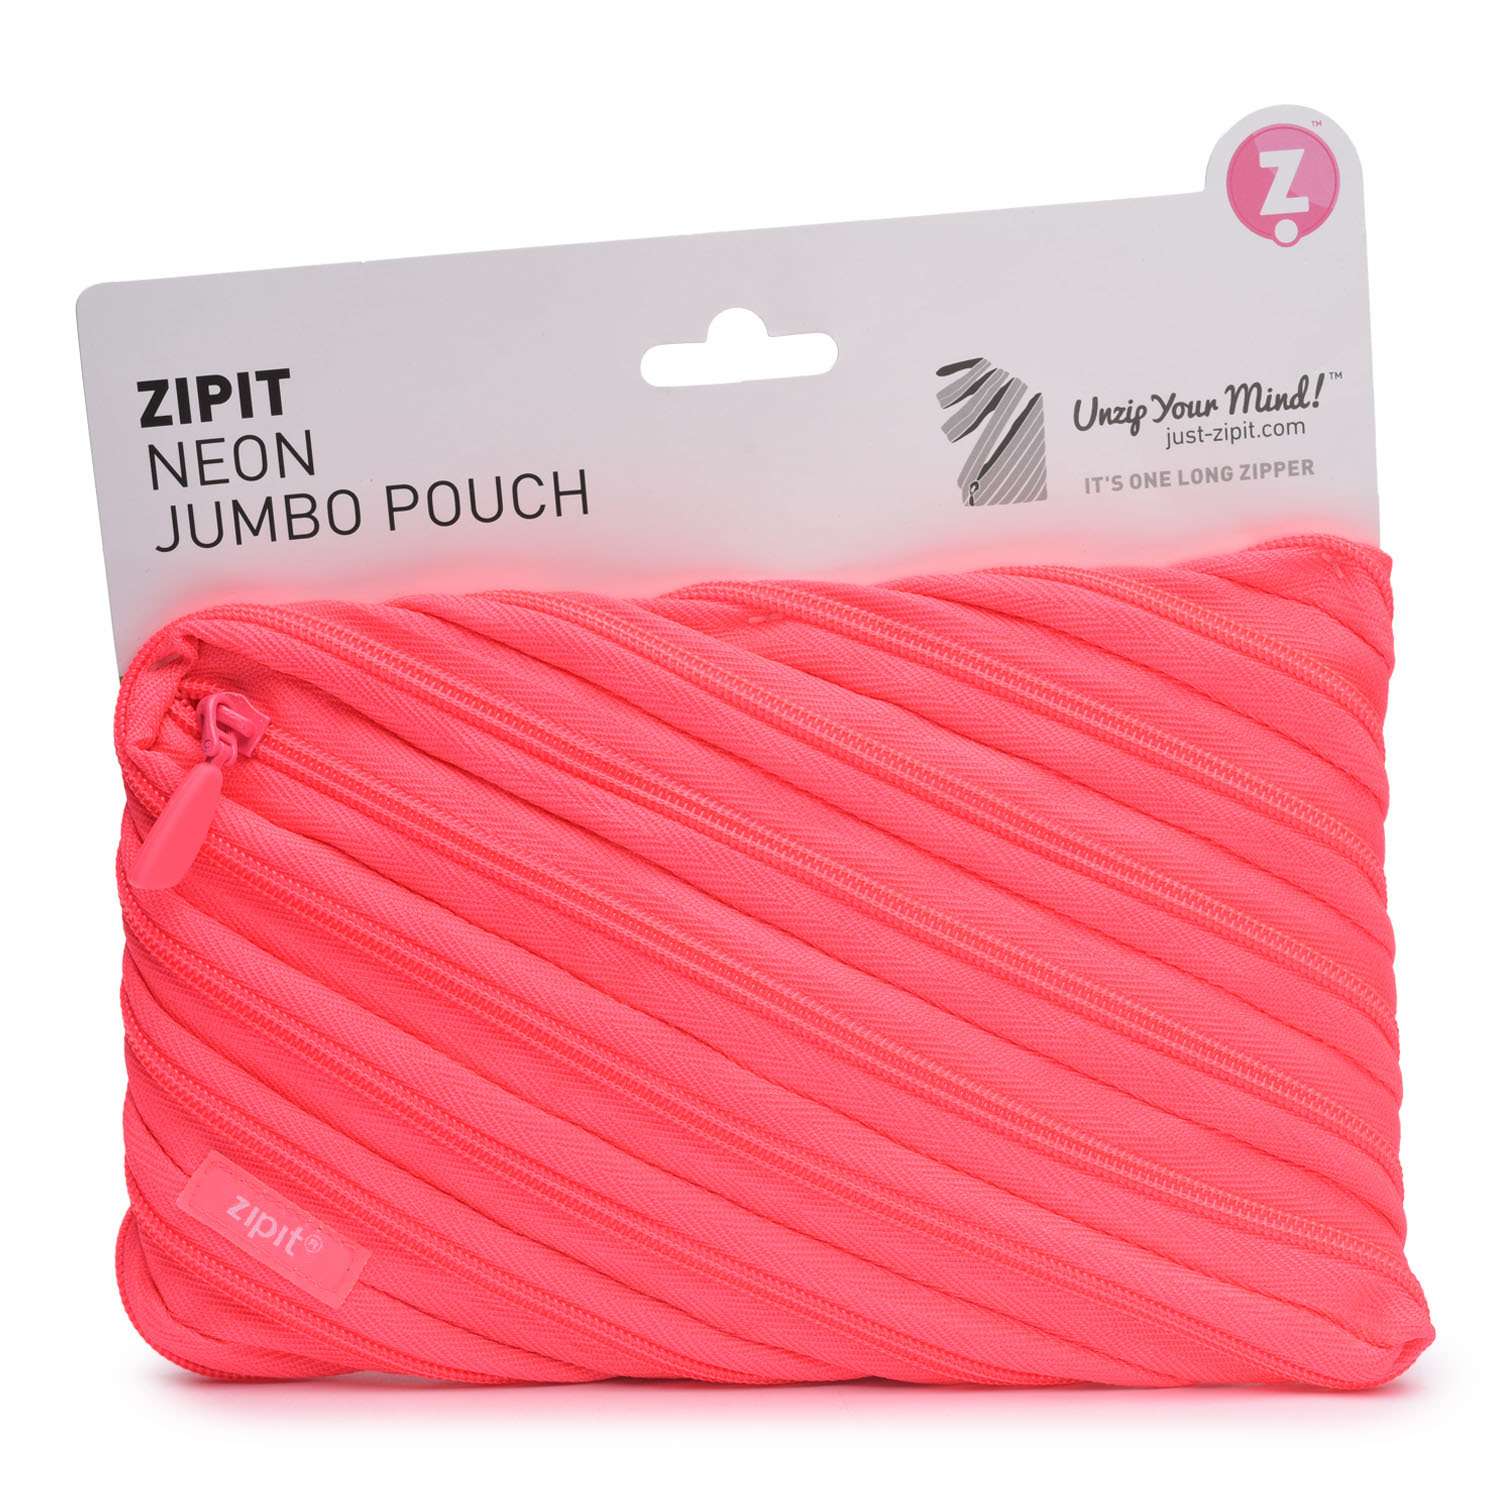 Пенал Zipit Neon Pouch цвет розовый - фото 1